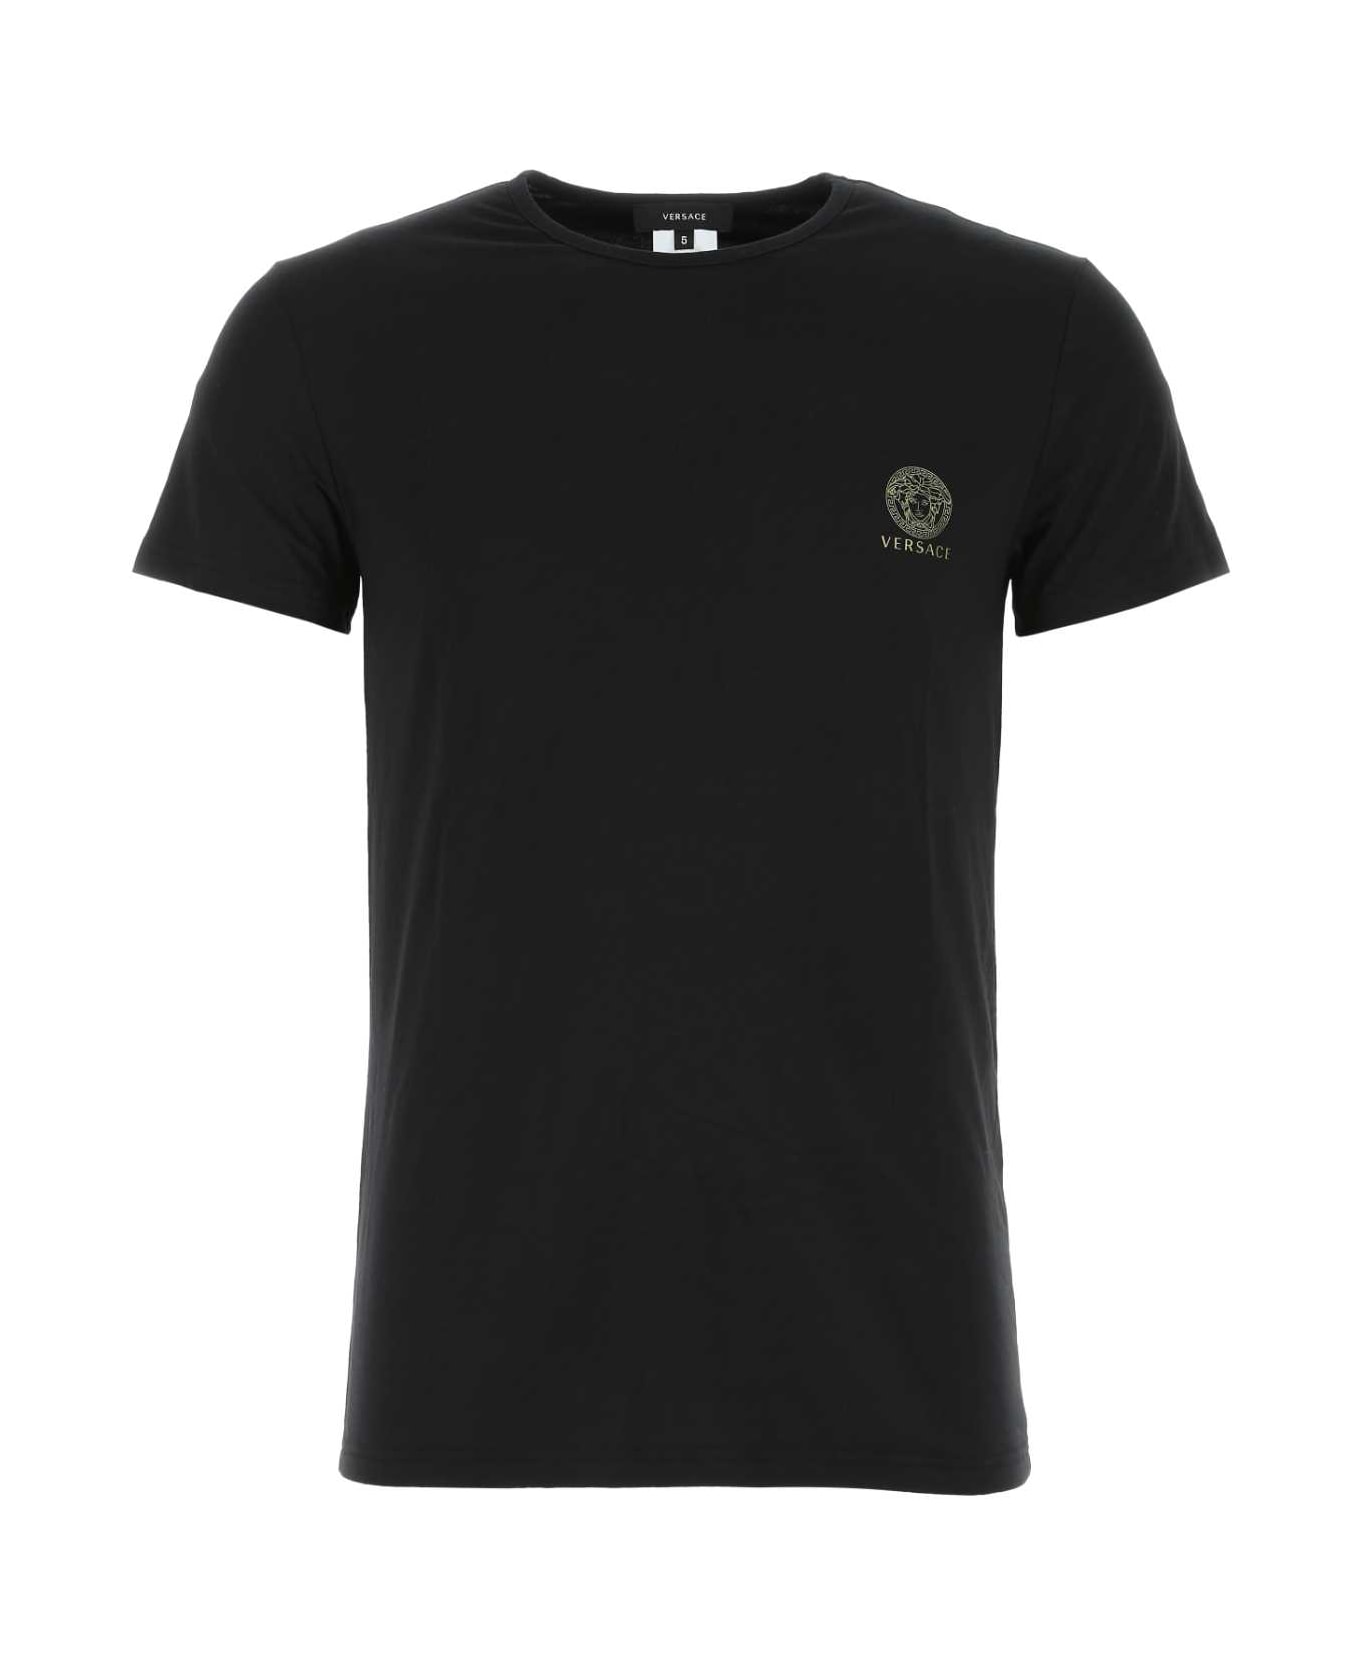 Versace Black Stretch Cotton T-shirt - A1008